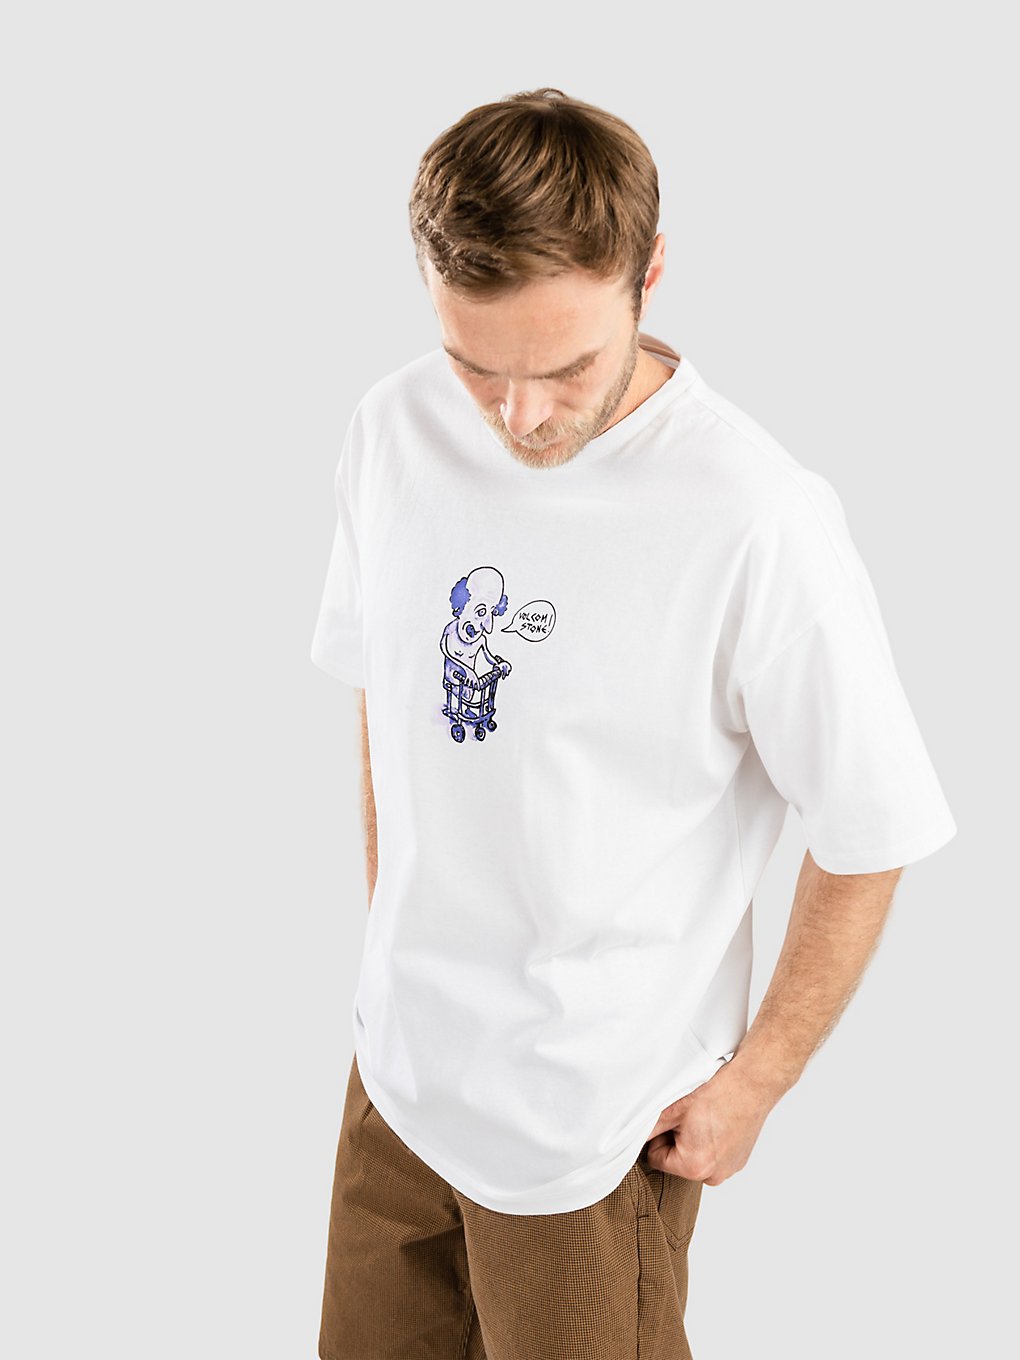 Volcom Slowfutur T-Shirt white kaufen